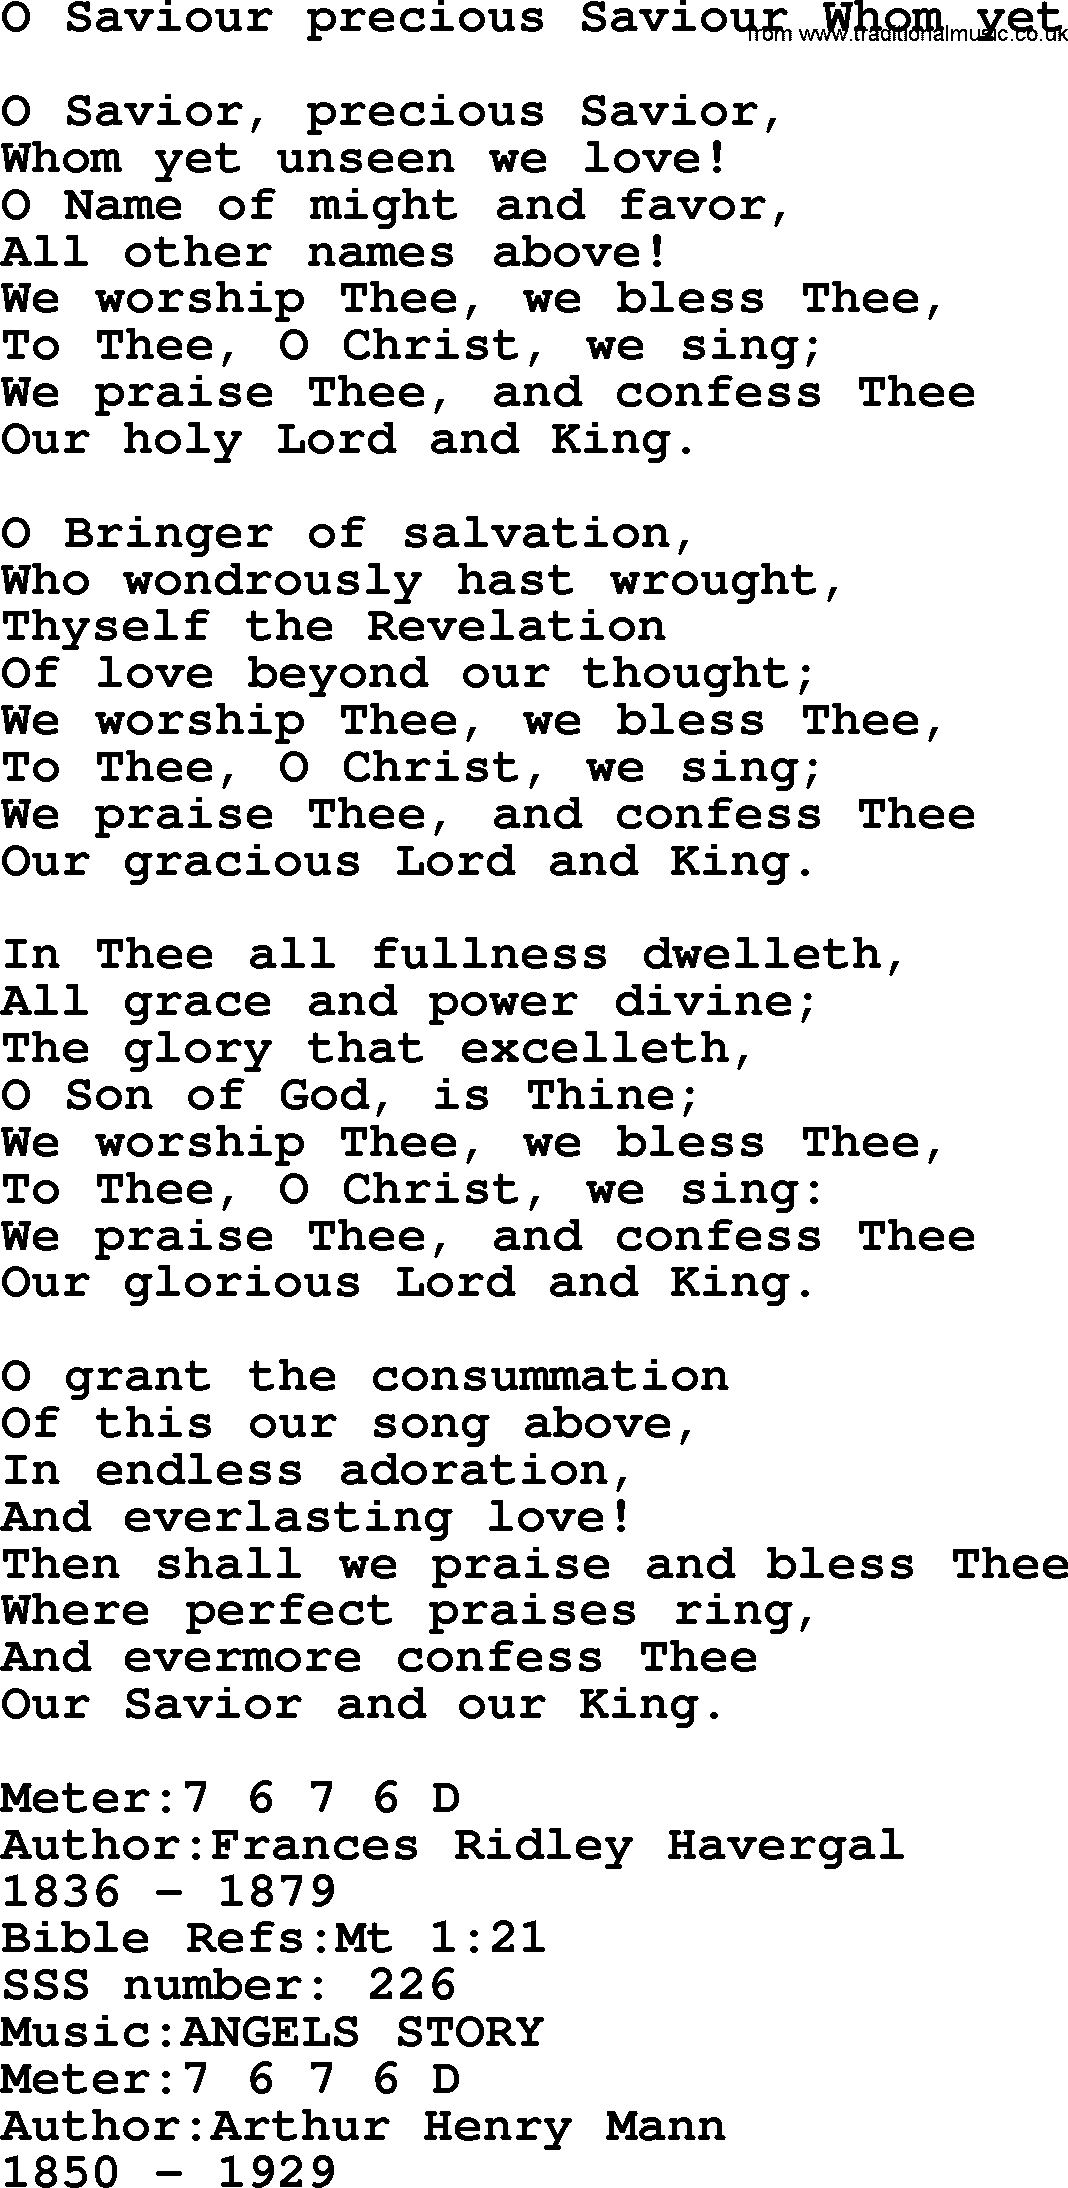 Sacred Songs and Solos complete, 1200 Hymns, title: O Saviour Precious Saviour Whom Yet, lyrics and PDF